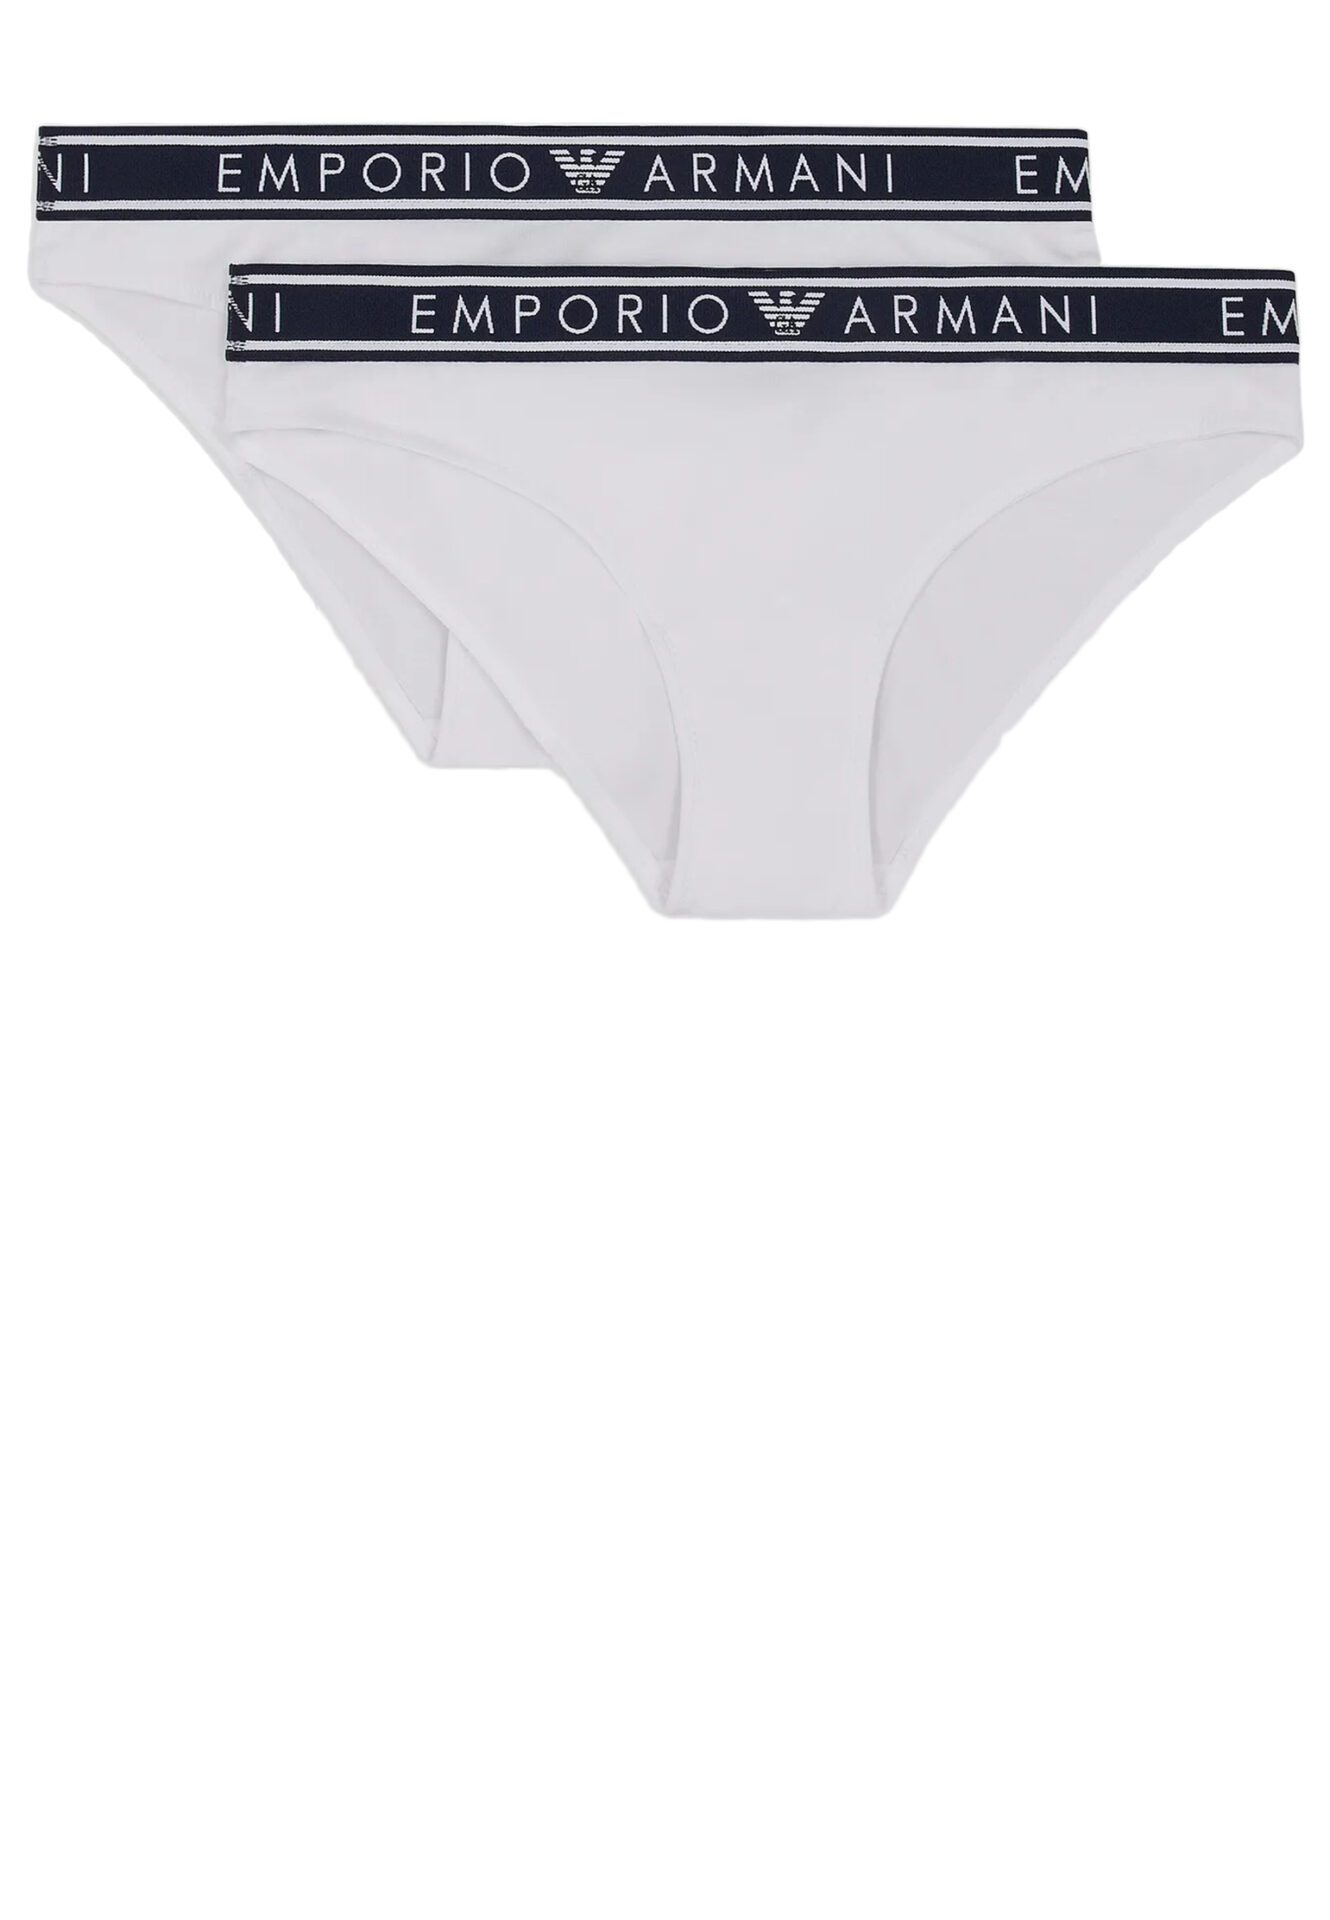 Комплект трусов EMPORIO ARMANI Underwear